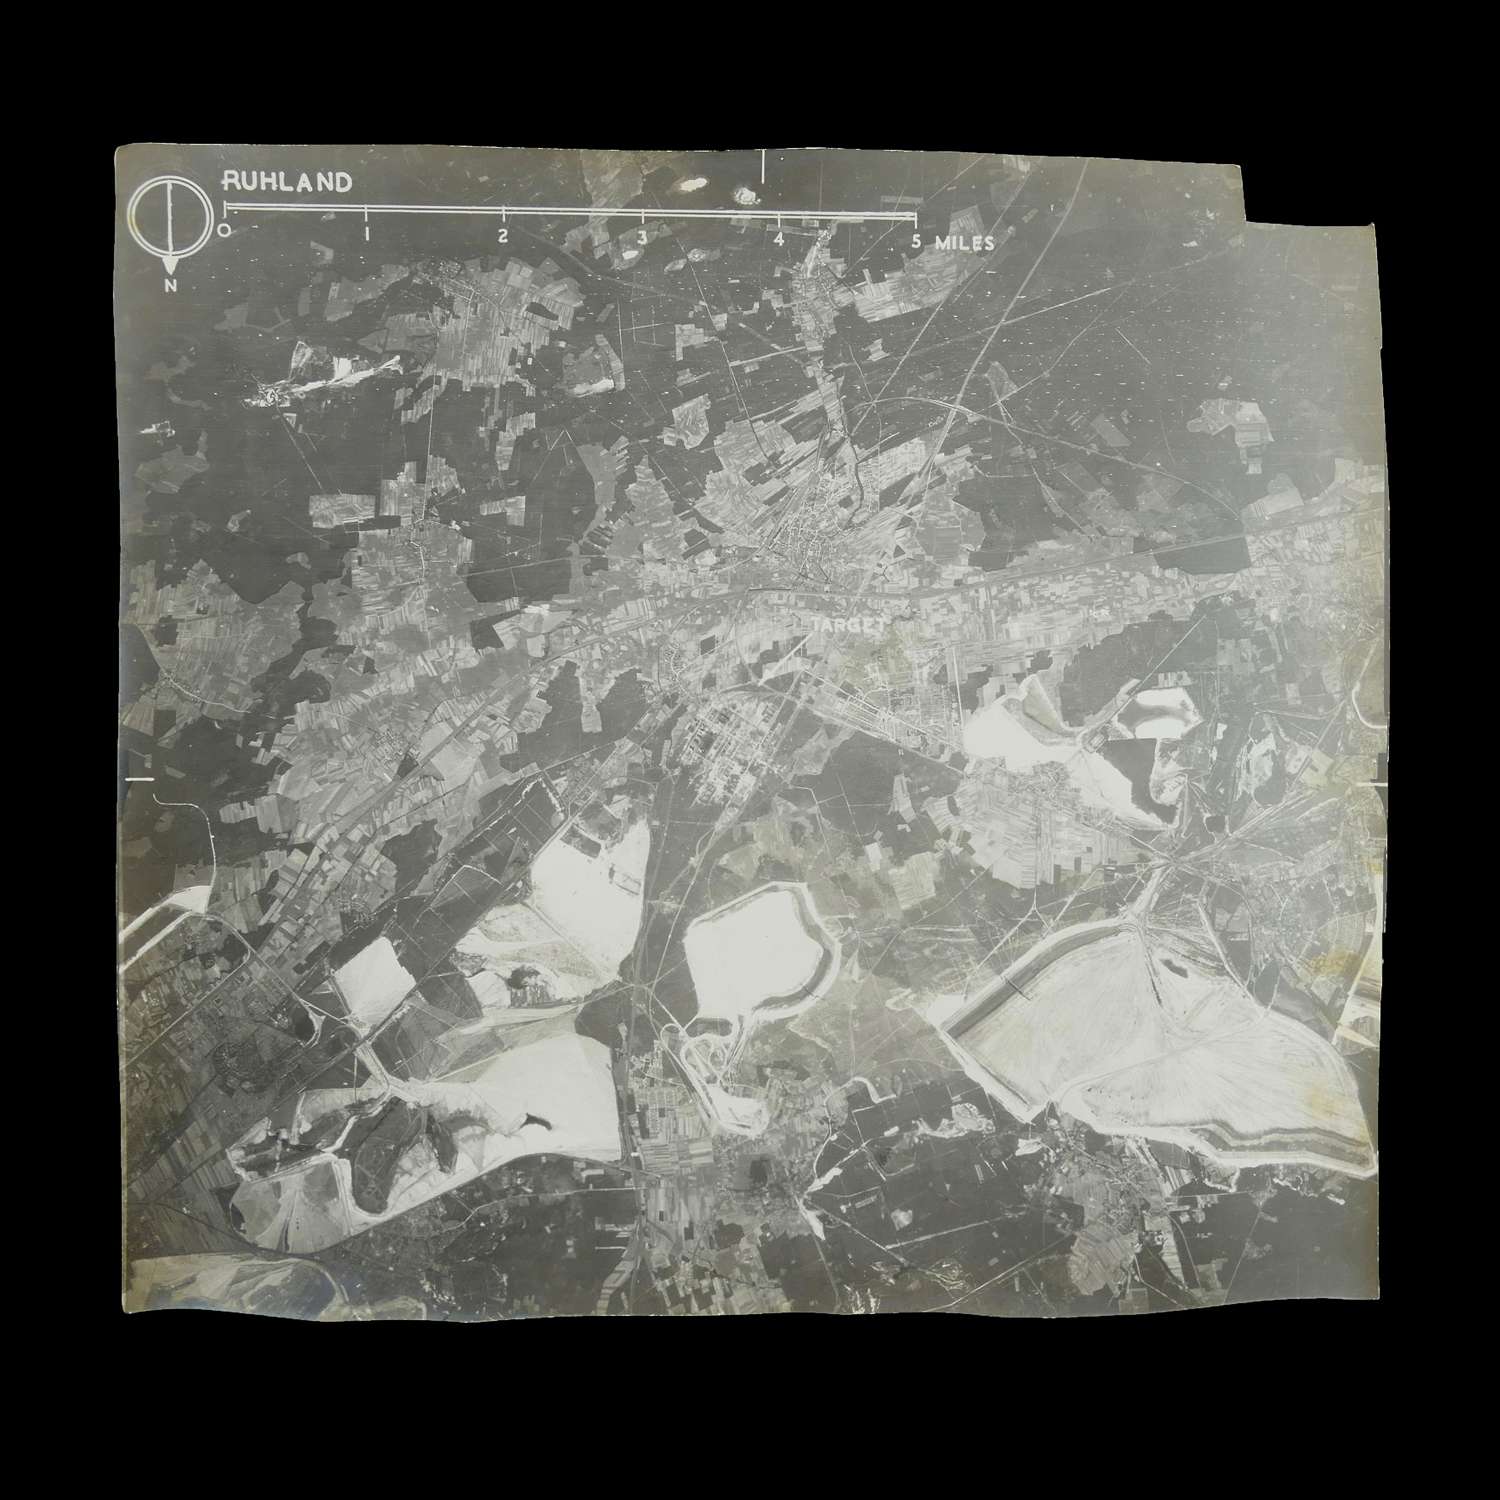 USAAF 91st bomb group target photo - Ruhland